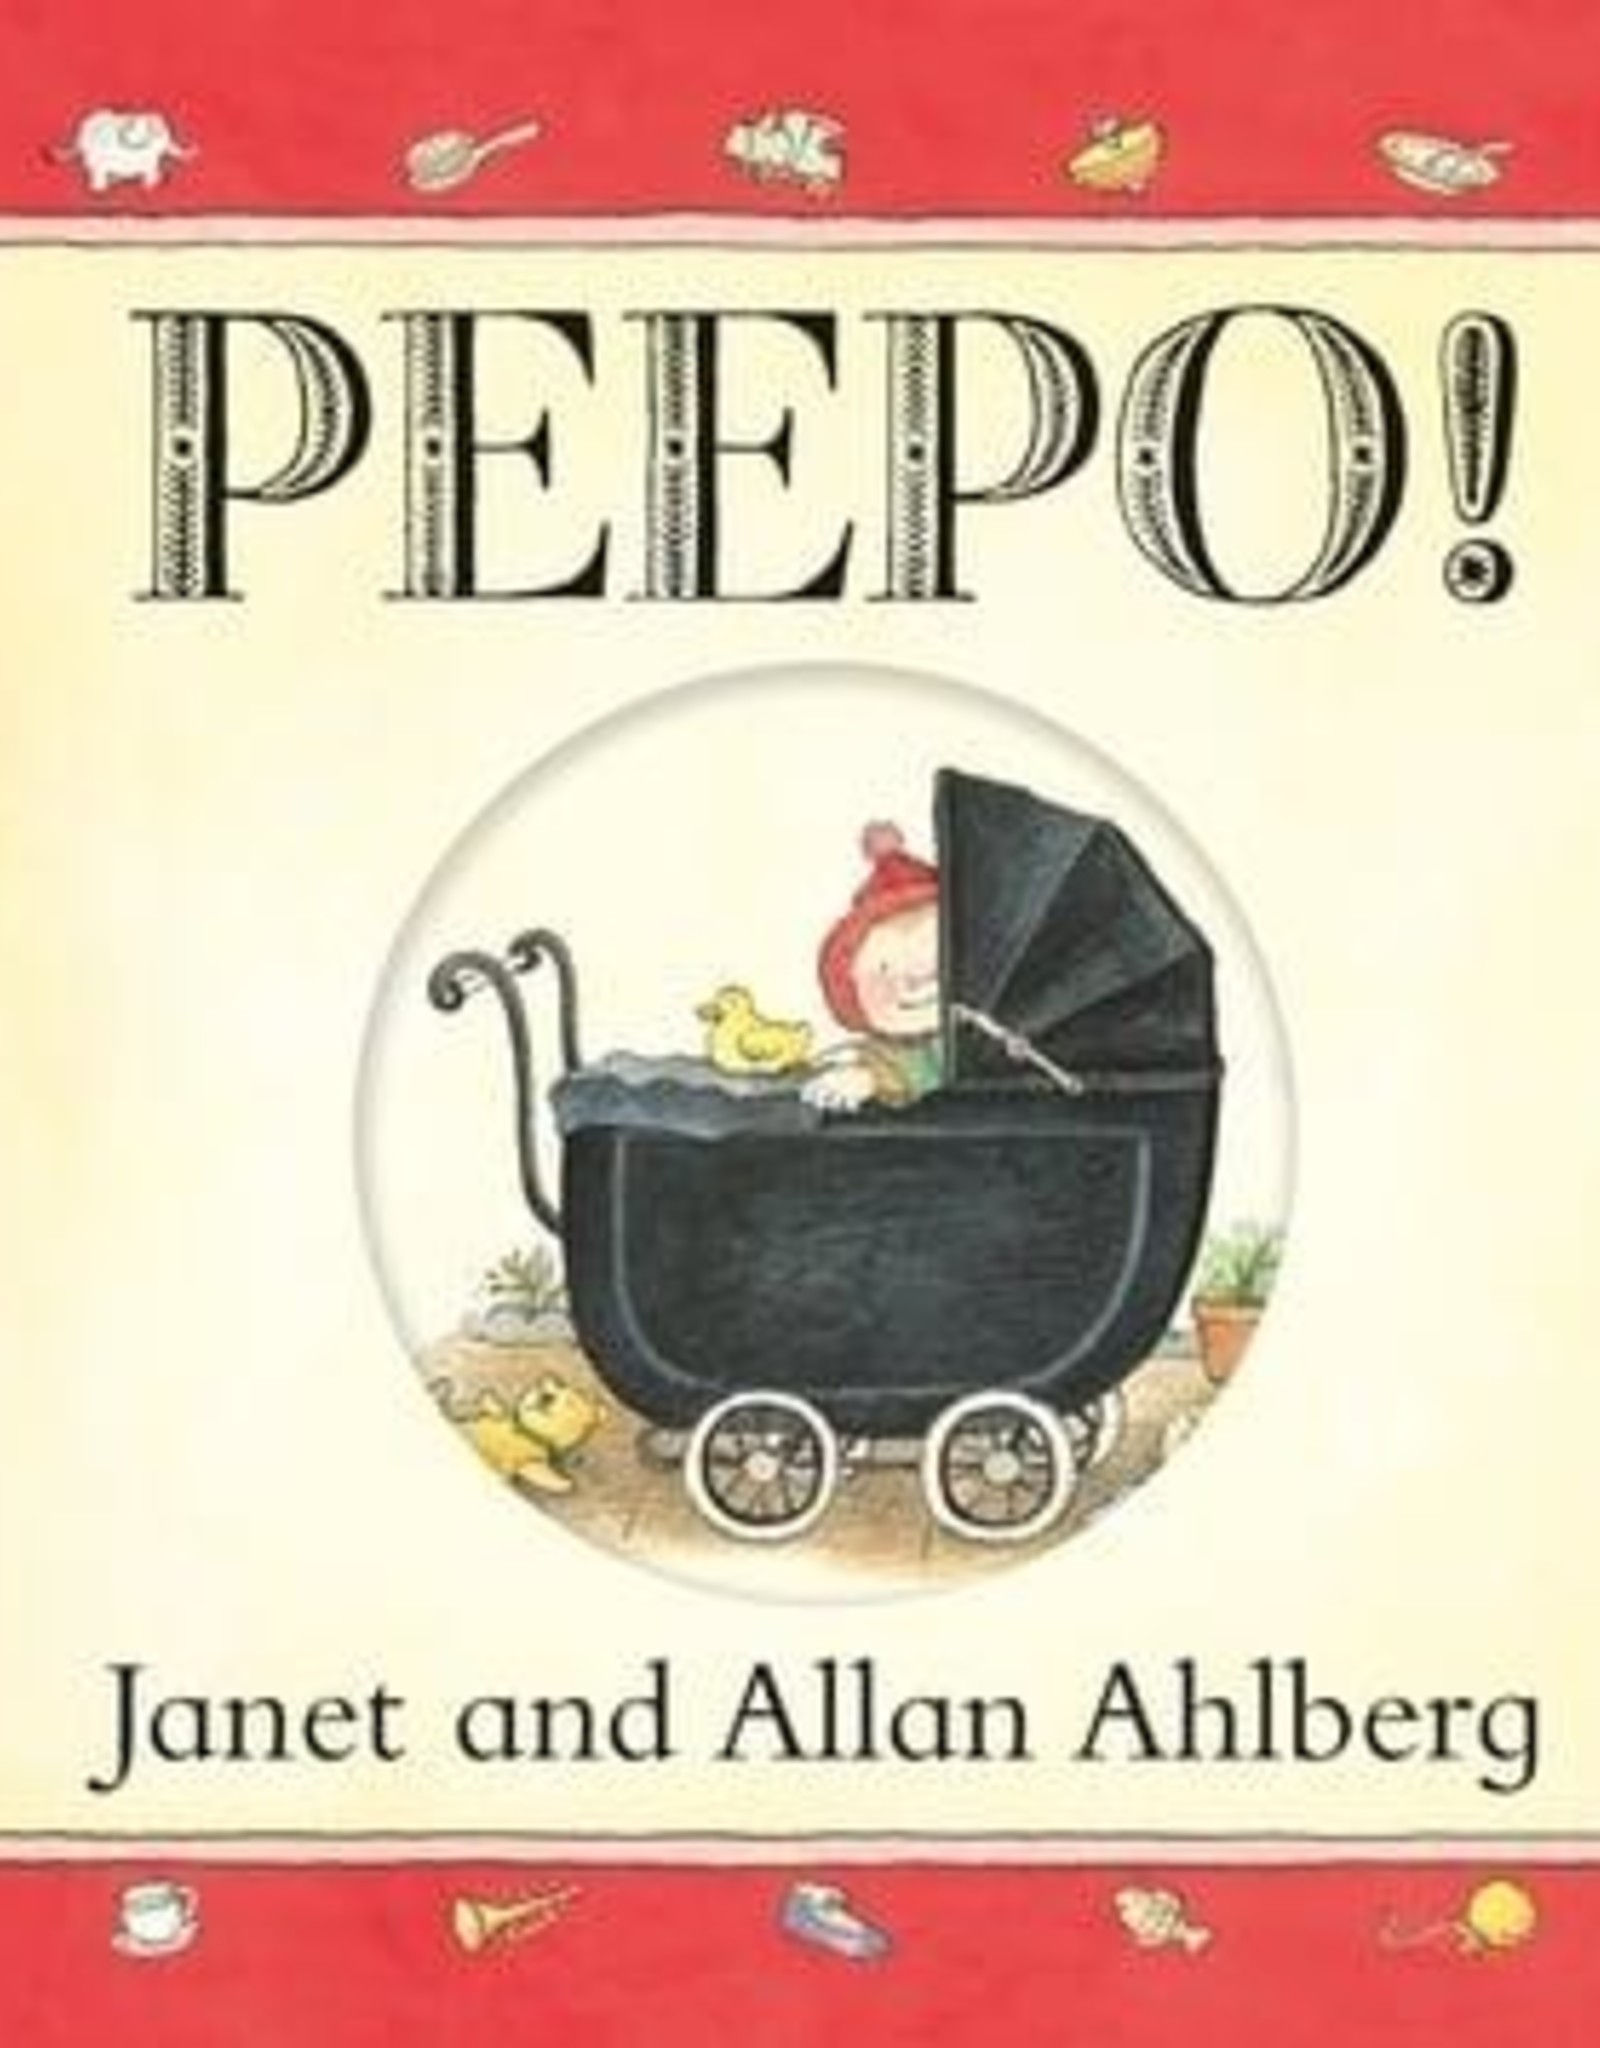 PEEPO (BOARD BOOK DIE CUT COVER)